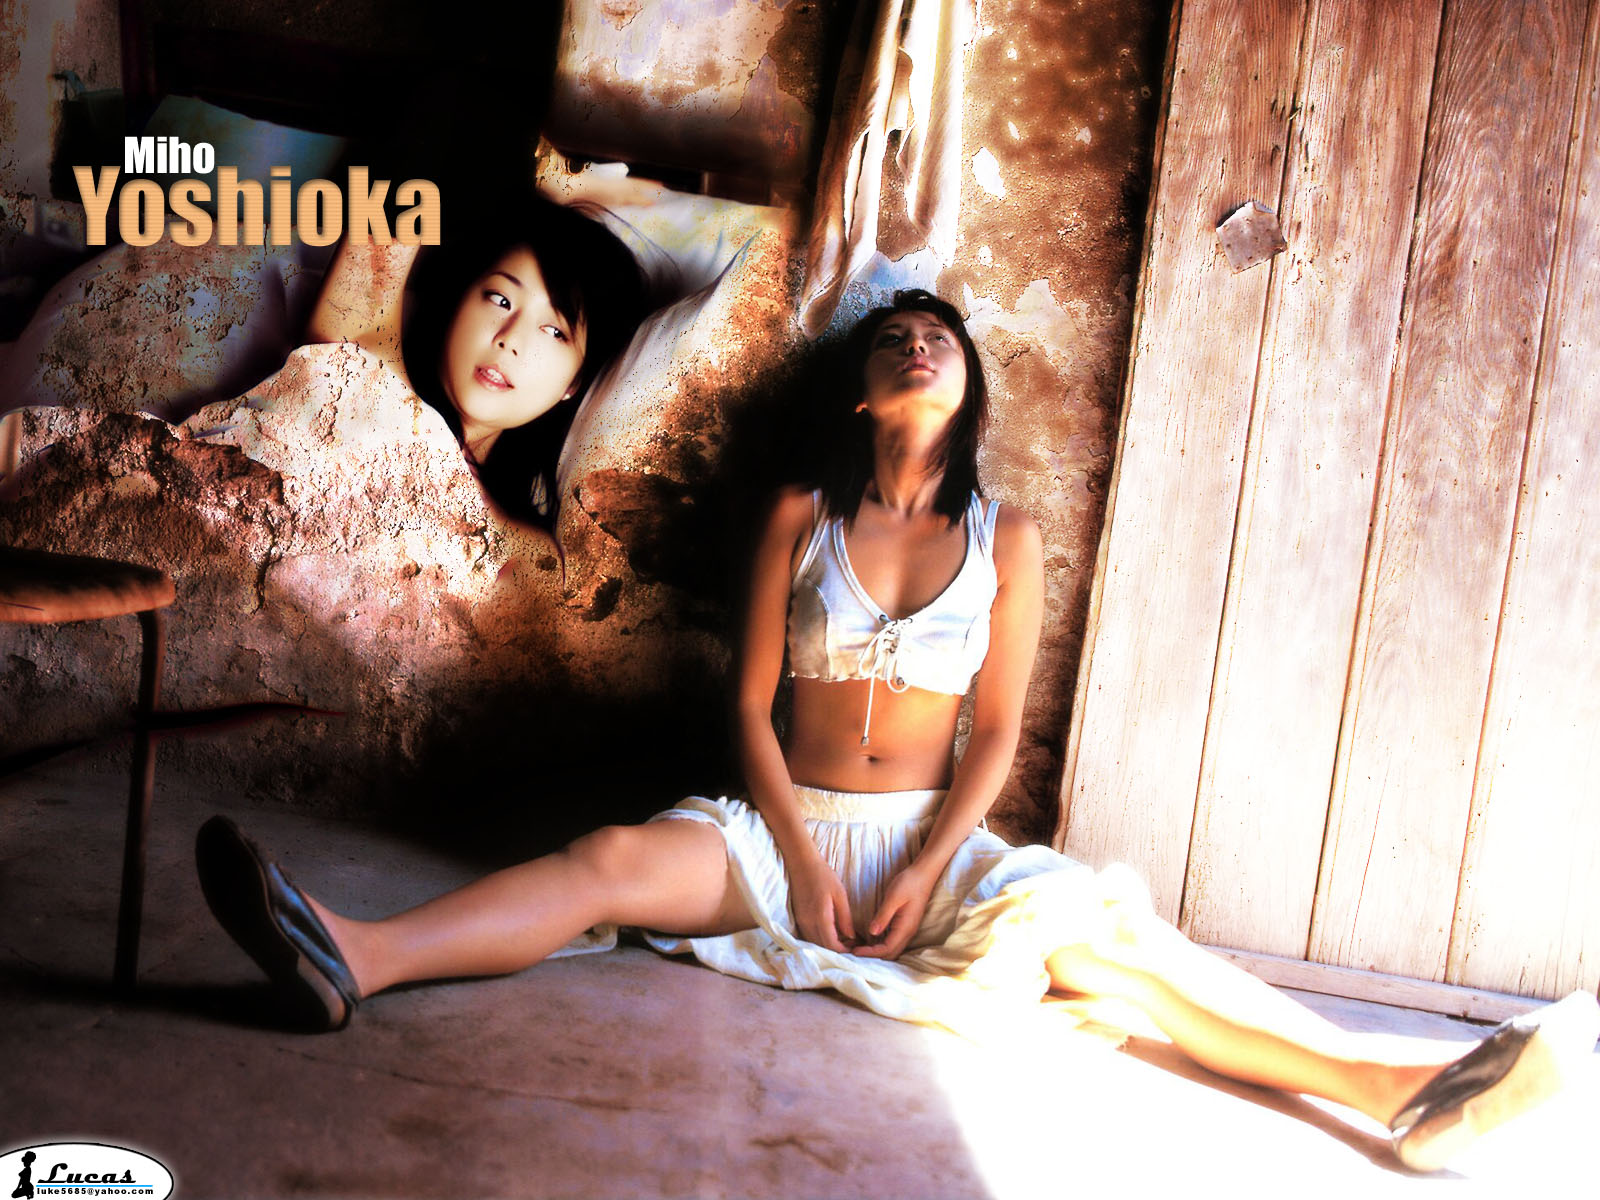 Download High quality Miho Yoshioka wallpaper / Celebrities Female / 1600x1200